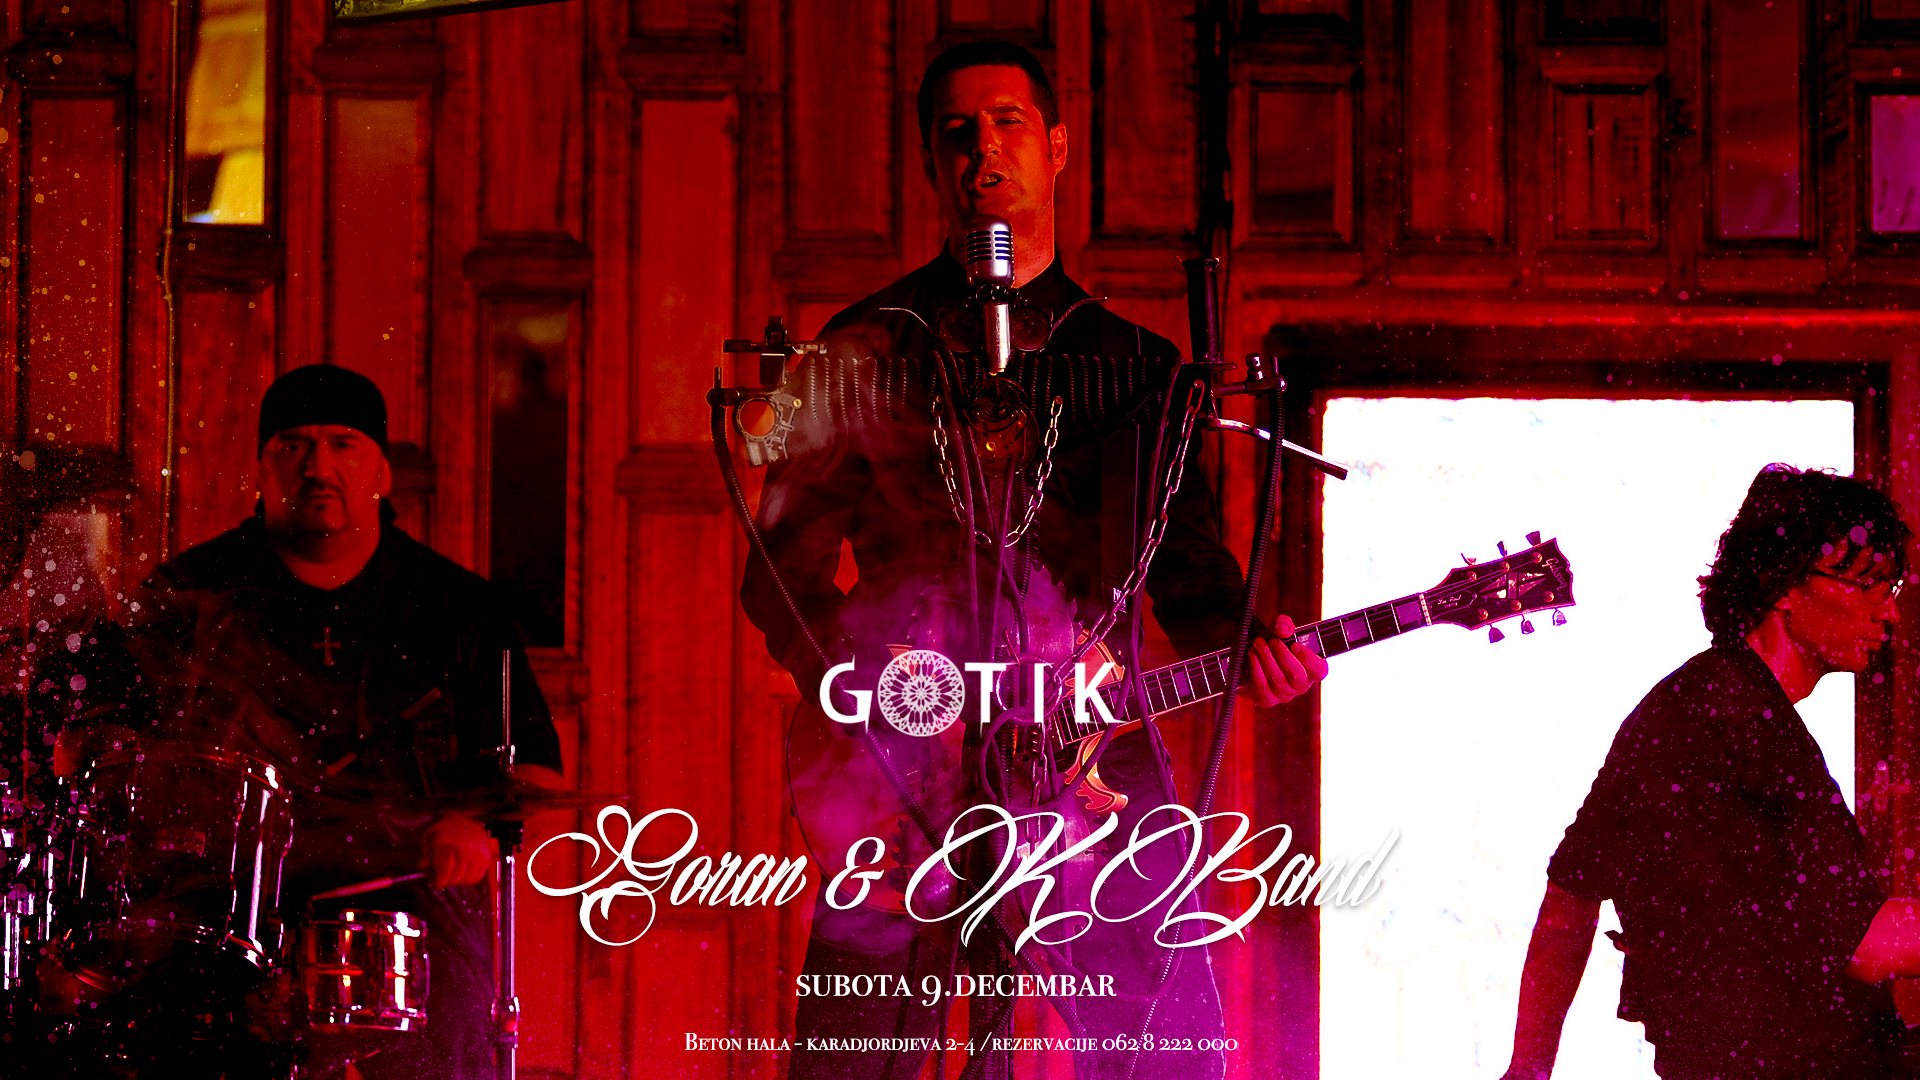 [:en] GORAN & OK BAND 09.12.2017. Gotik